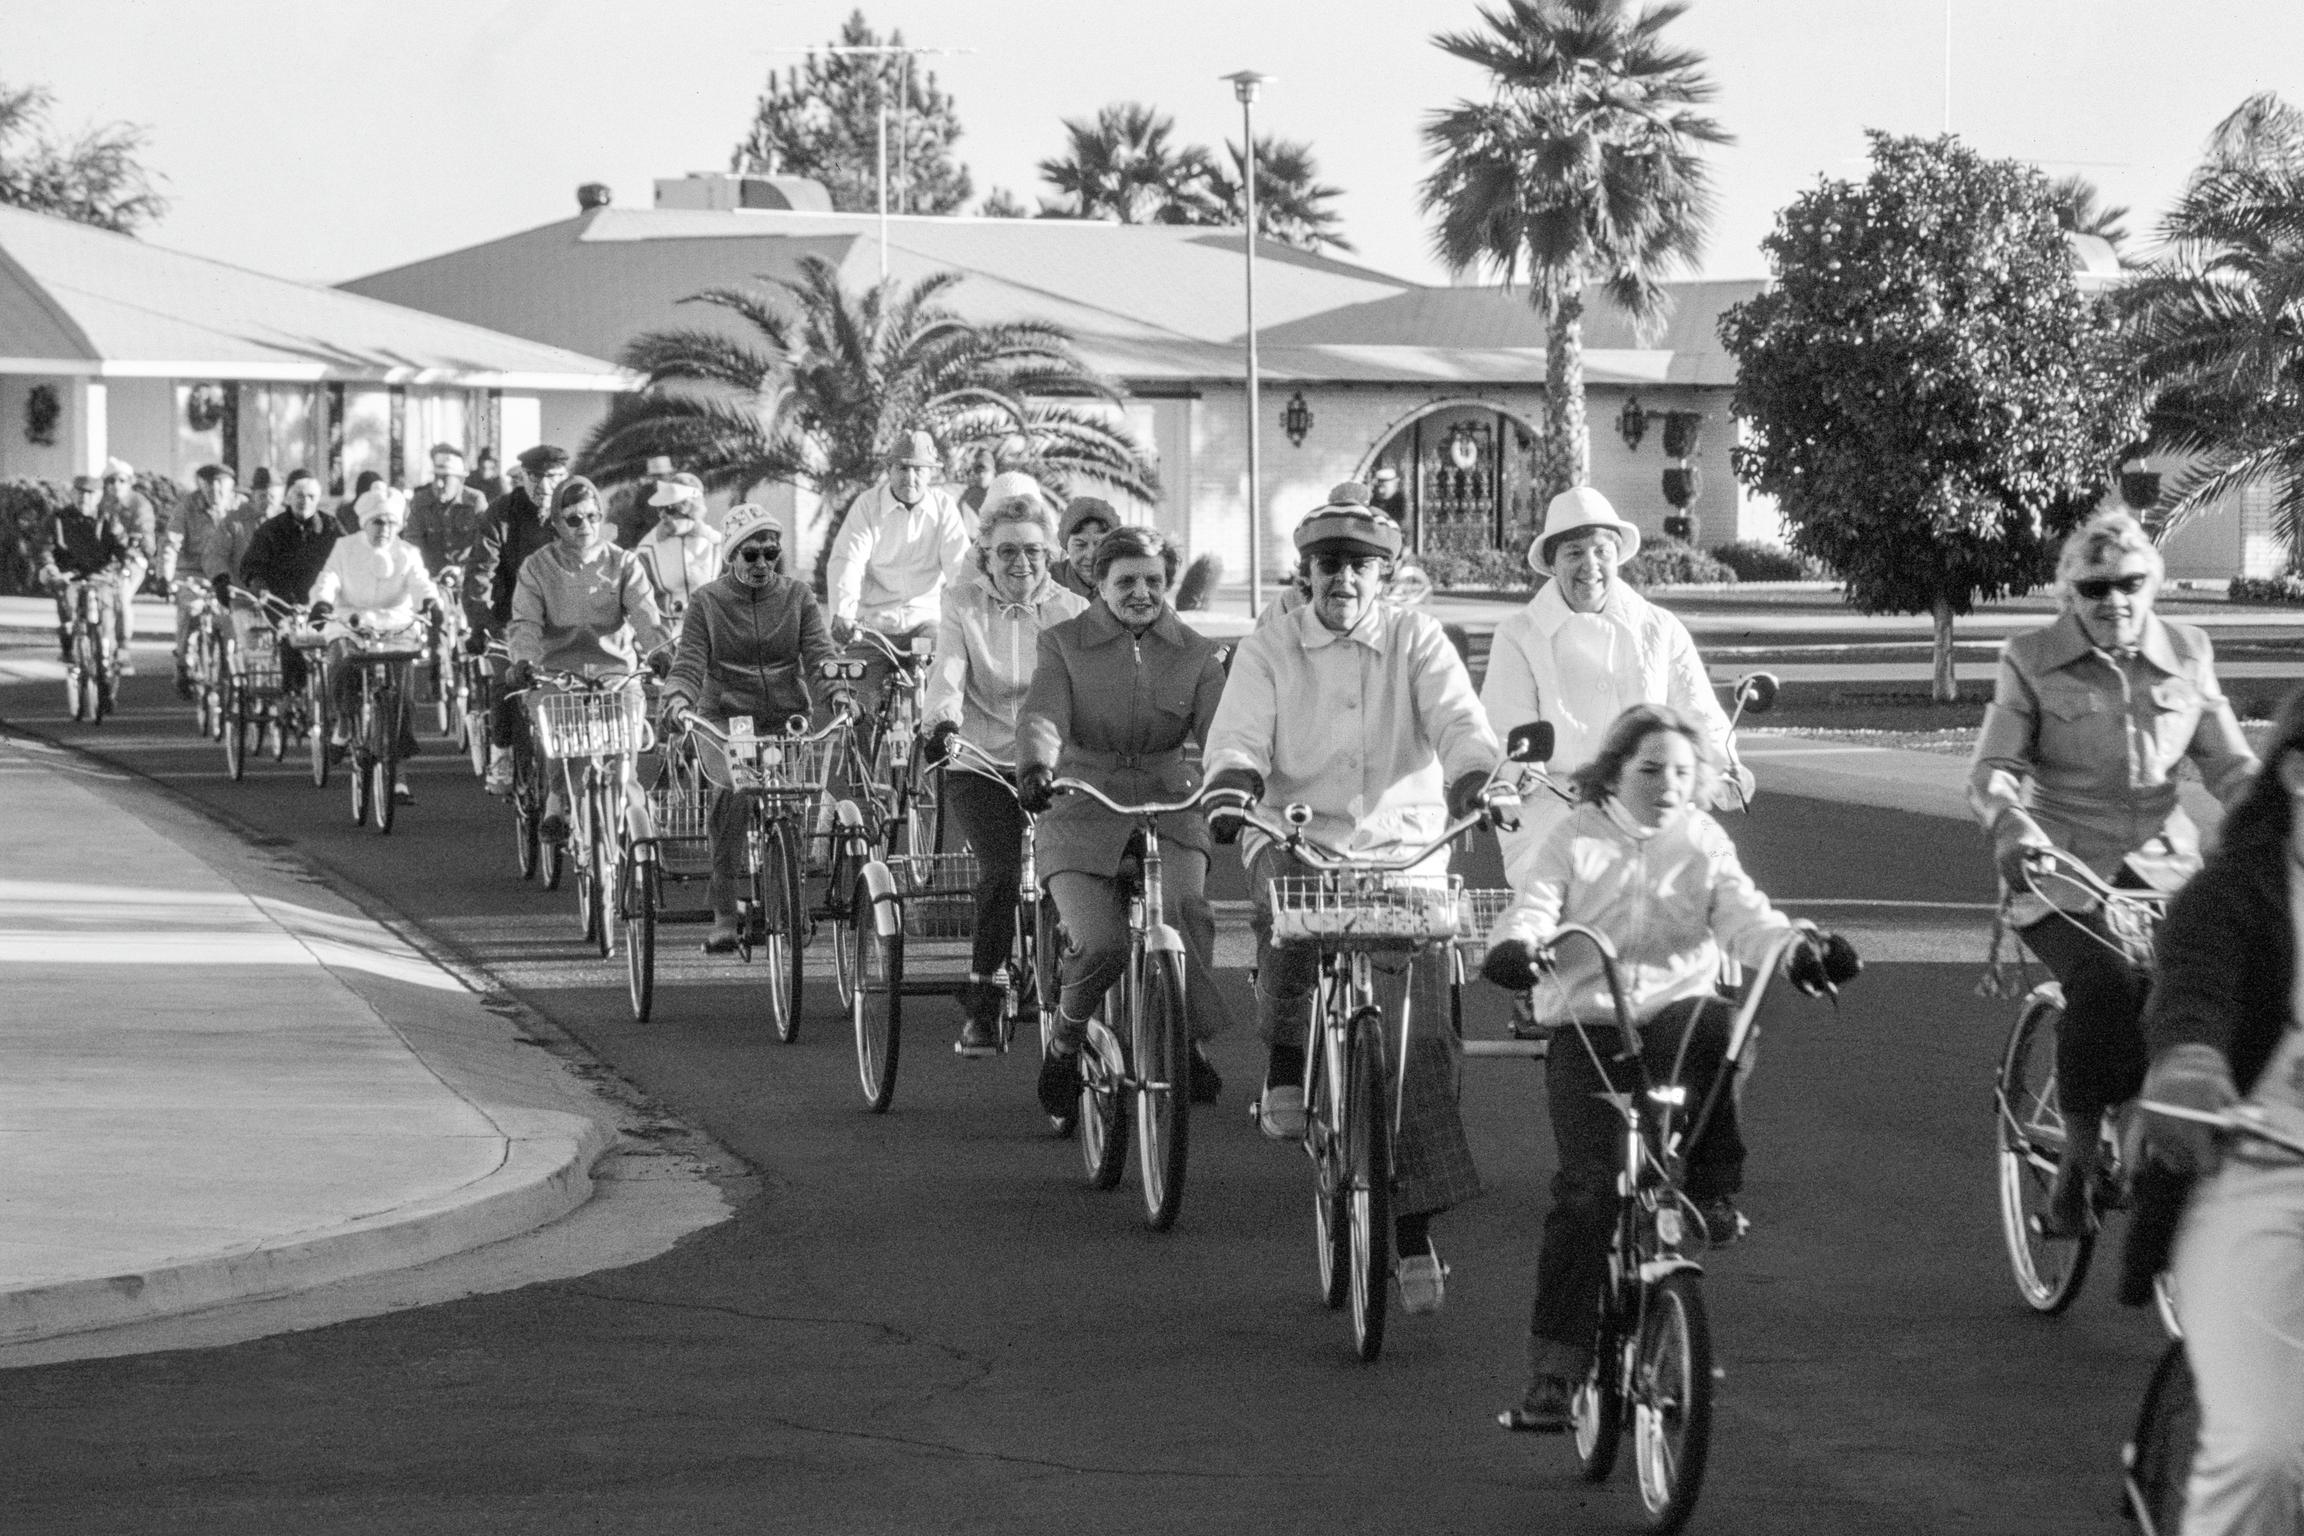 Cycle-mates over 50s cycle club. Retirement city. Sun City, Arizona USA